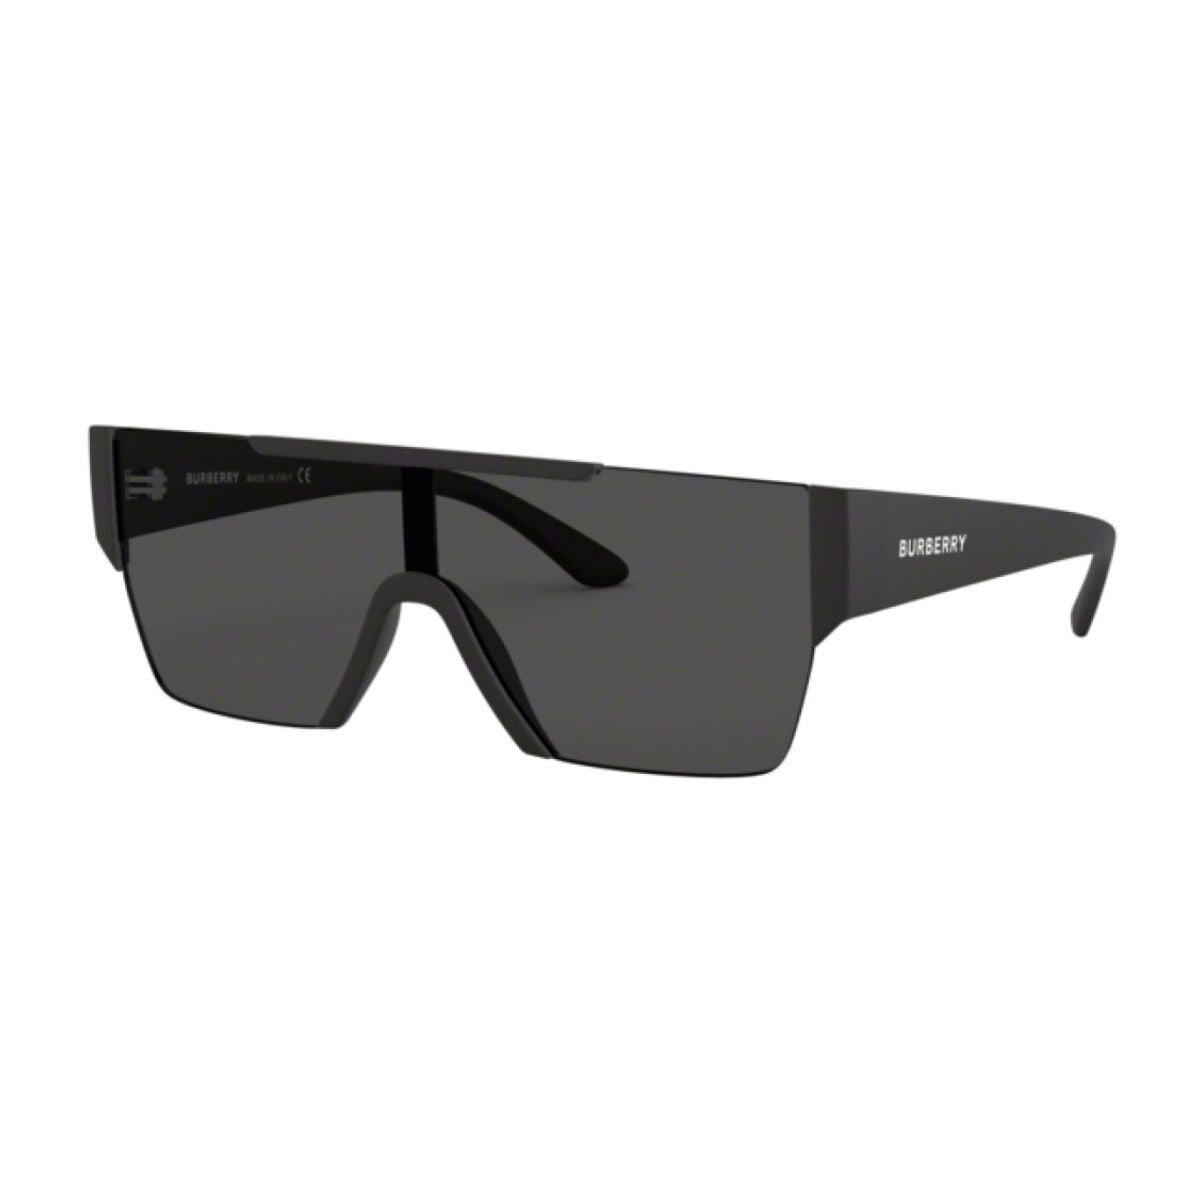 "Buy Burberry 4291 3464/87 Resistant Sunglasses For Men At Optorium""